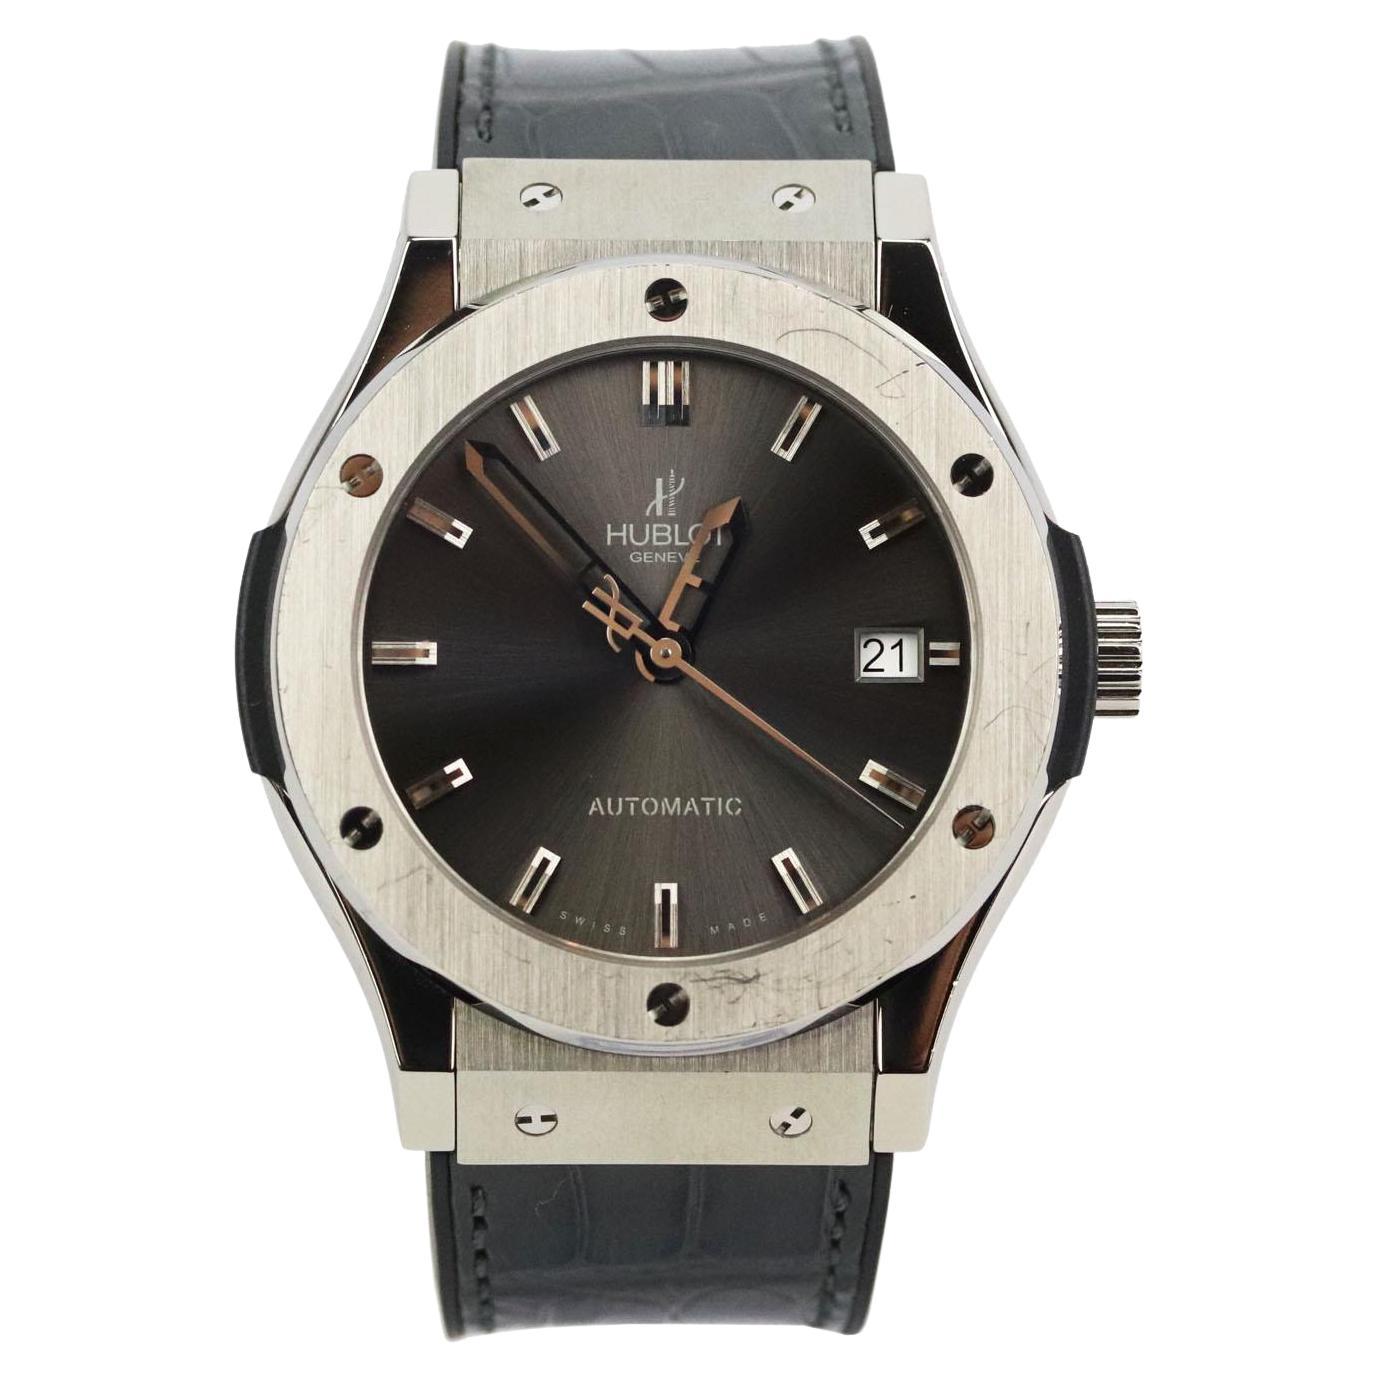 42mm Watches - 2 For Sale on 1stDibs | hublot vendome 536888, hublot 536888,  hublot geneve 536888